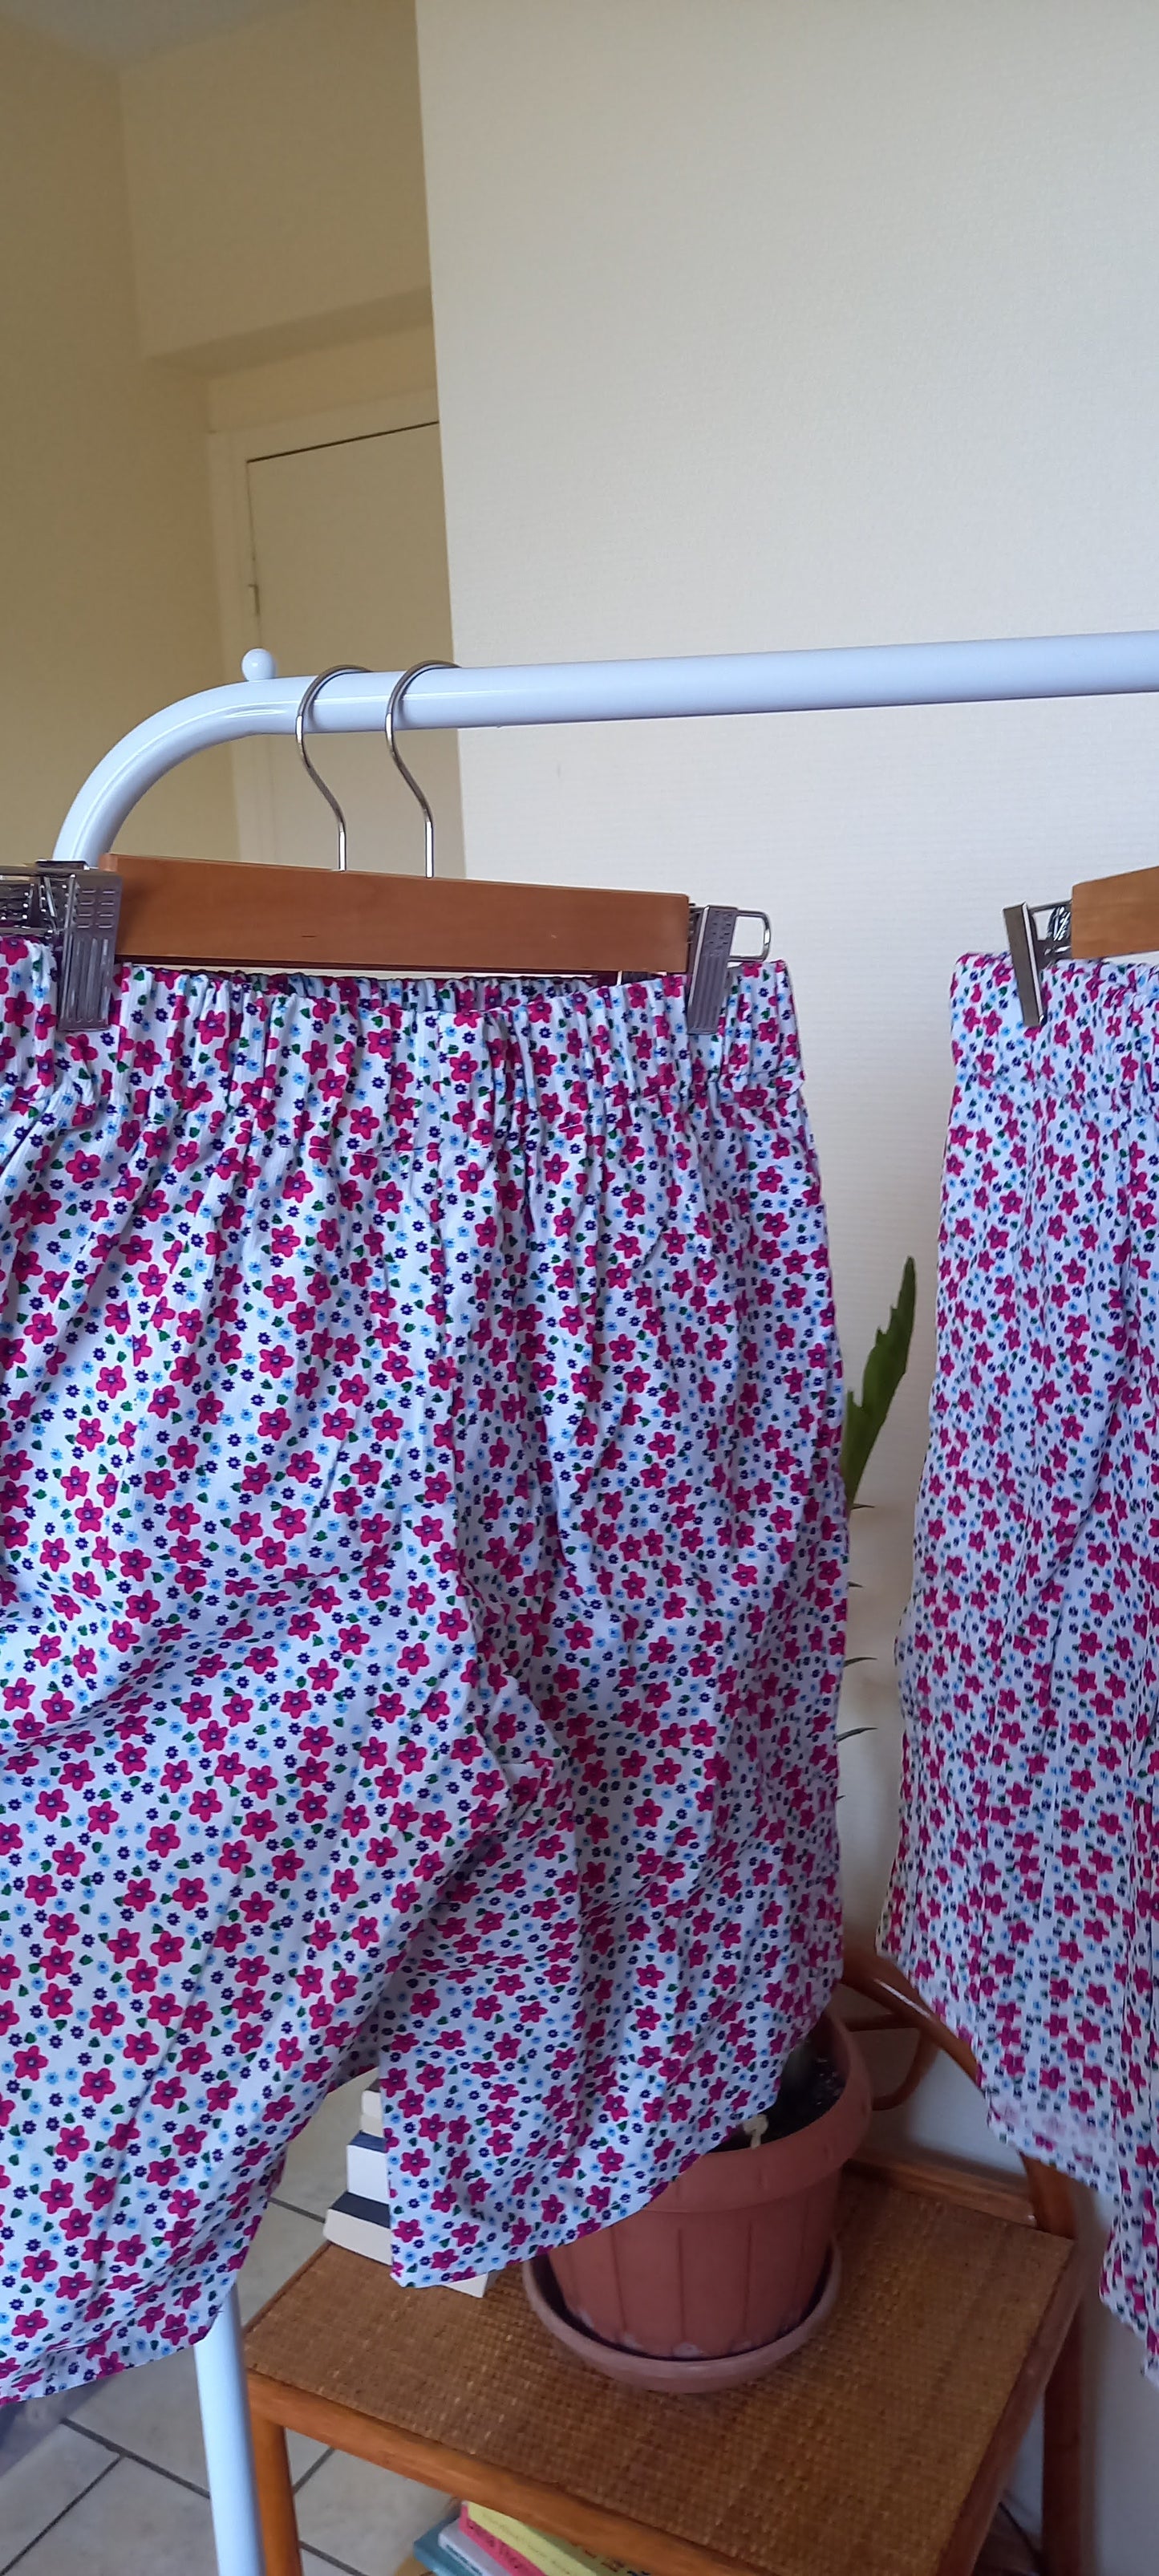 Corduroy shorts - floral